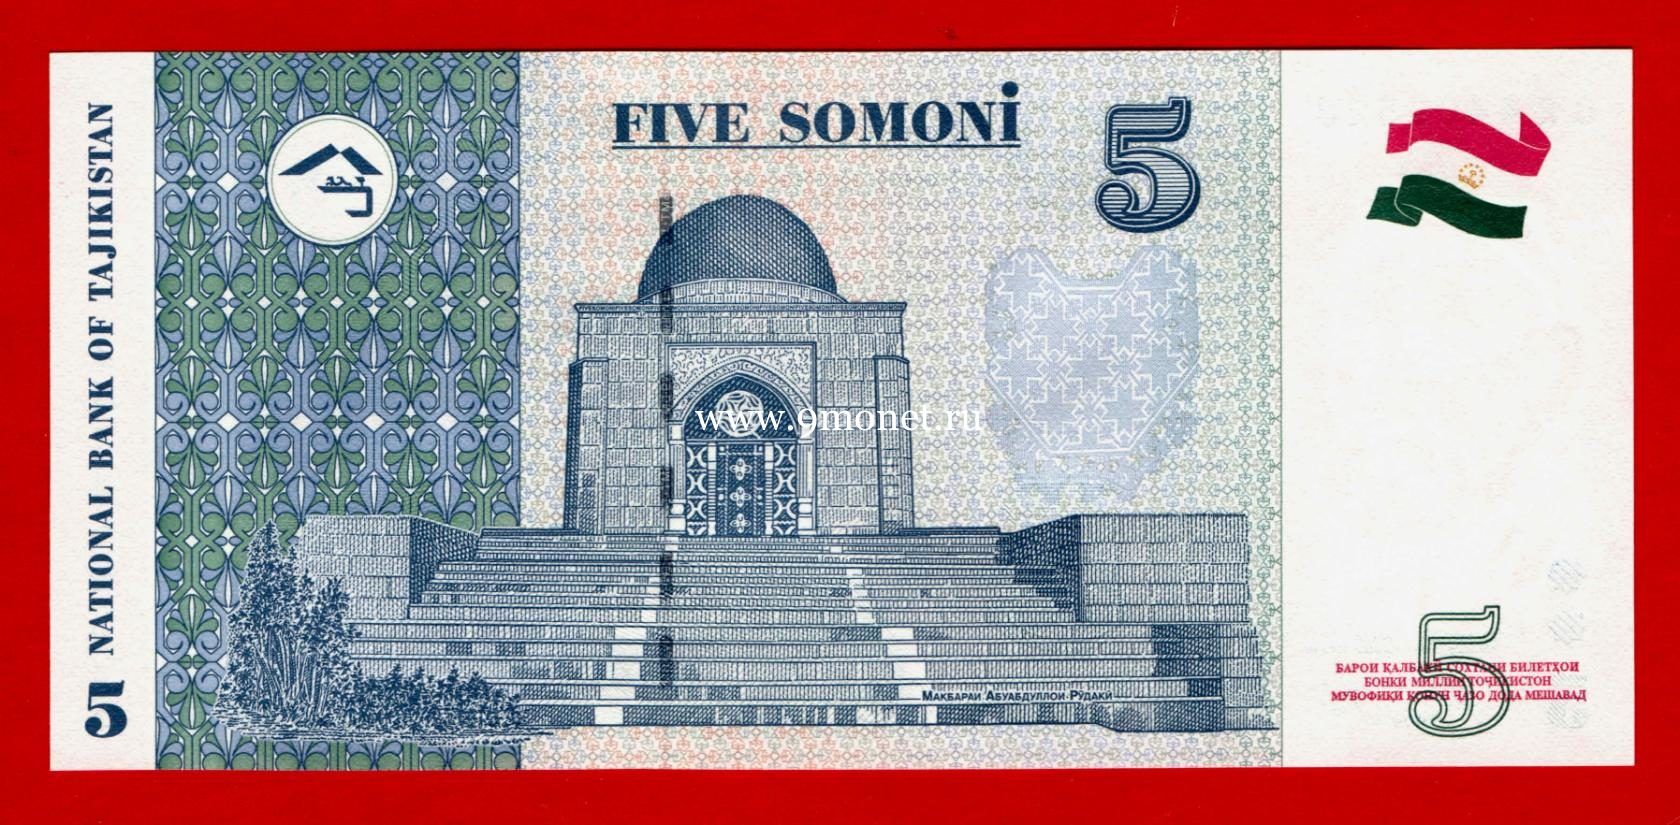 5000 рублей в сомони таджикистан сегодня. 5 Сомони 1999 Таджикистан. Денежные знаки Таджикистана. Купюра 5 Сомони.